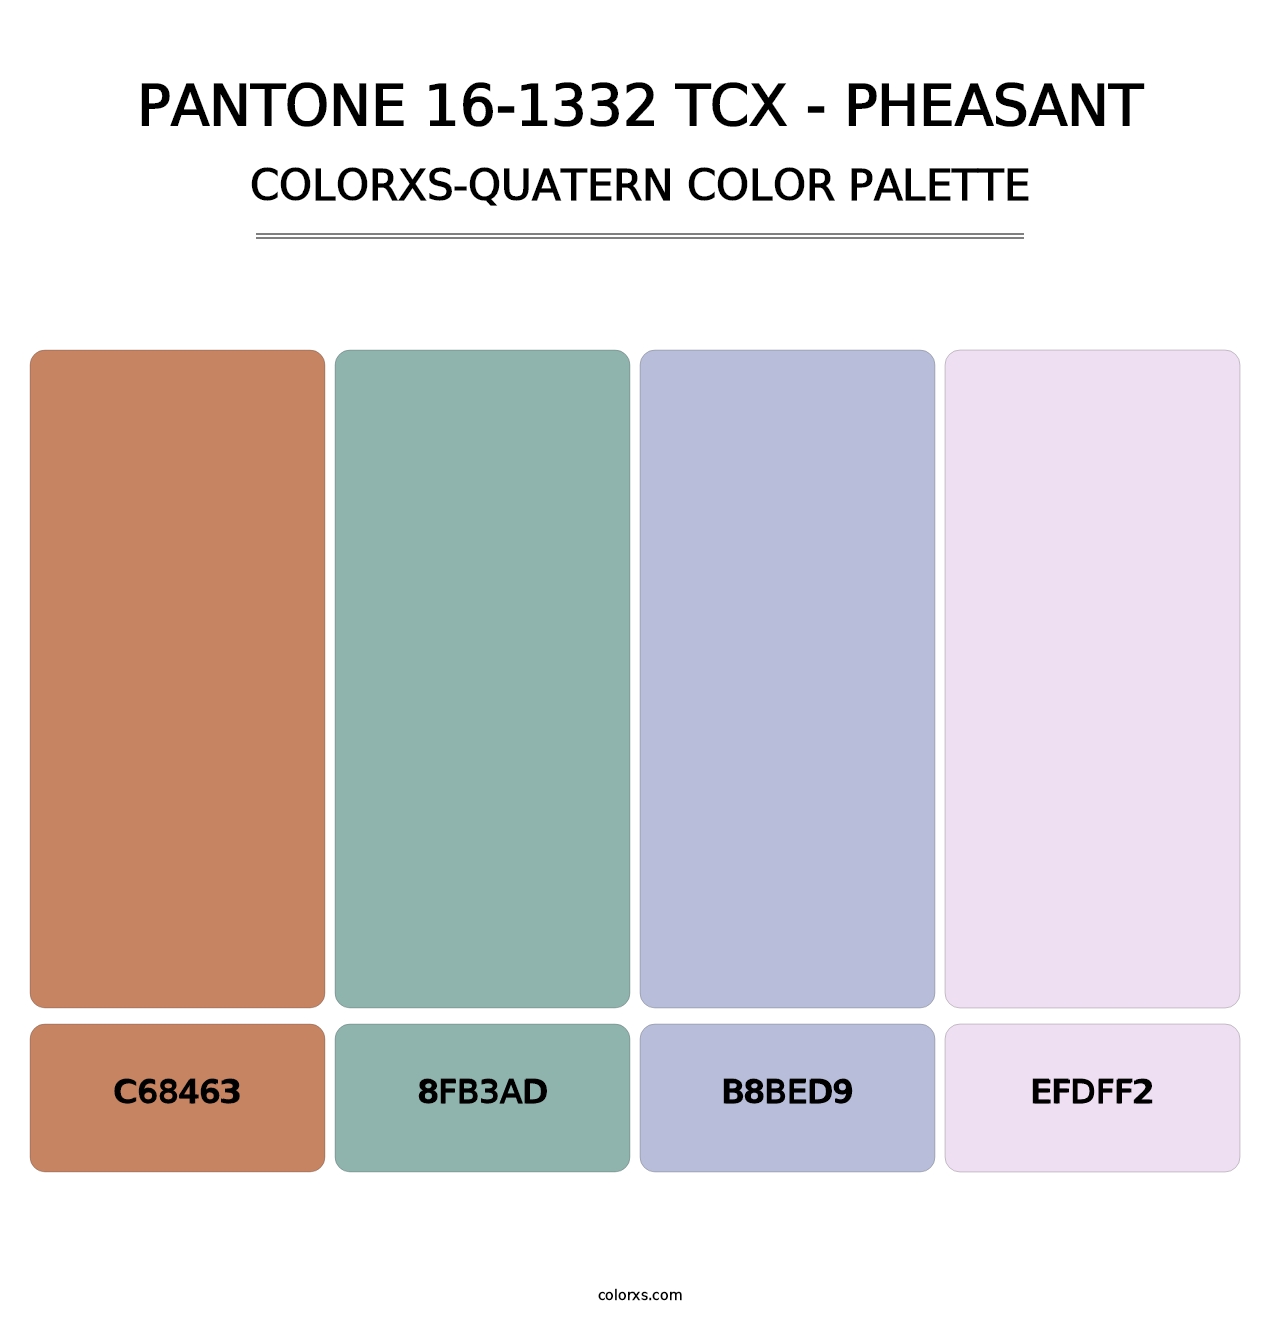 PANTONE 16-1332 TCX - Pheasant - Colorxs Quatern Palette